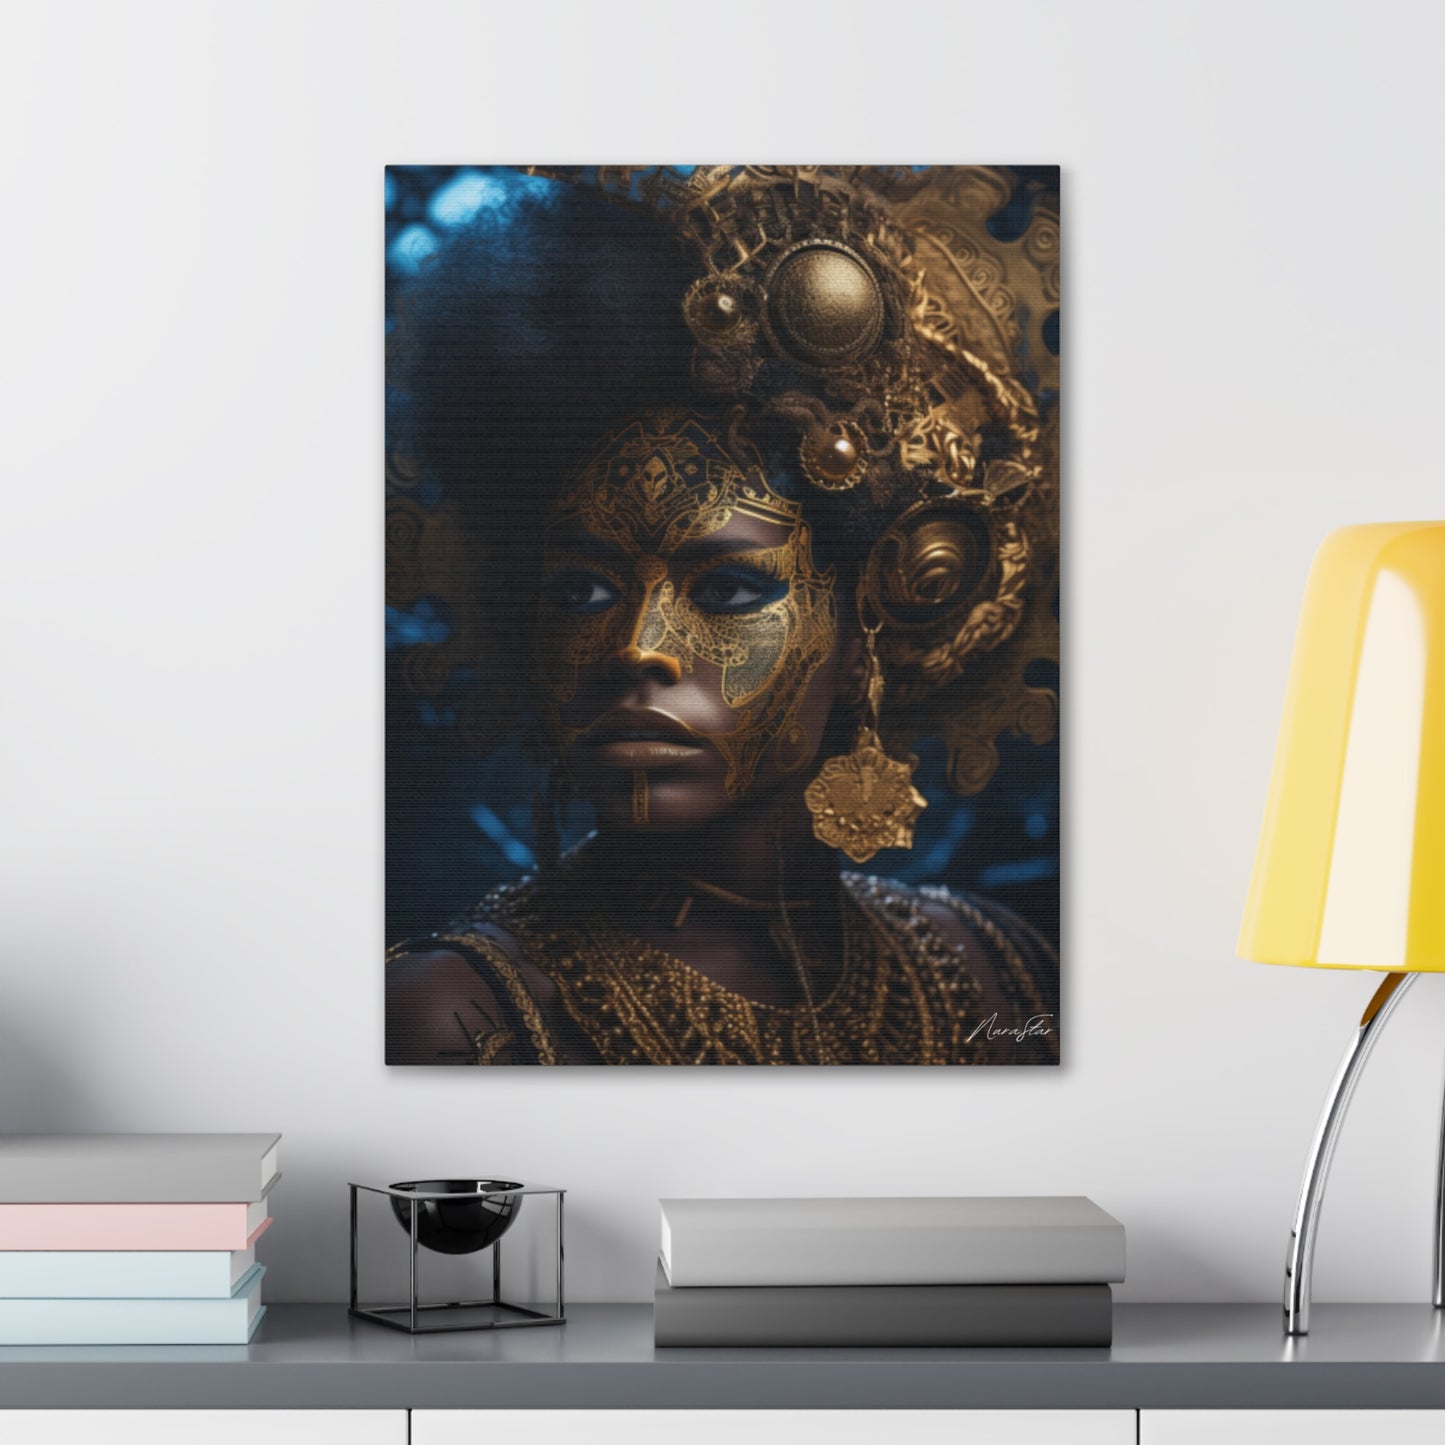 Alien African African American Woman Black Woman Canvas Gold Black Canvas Print Wall Art Home Decor